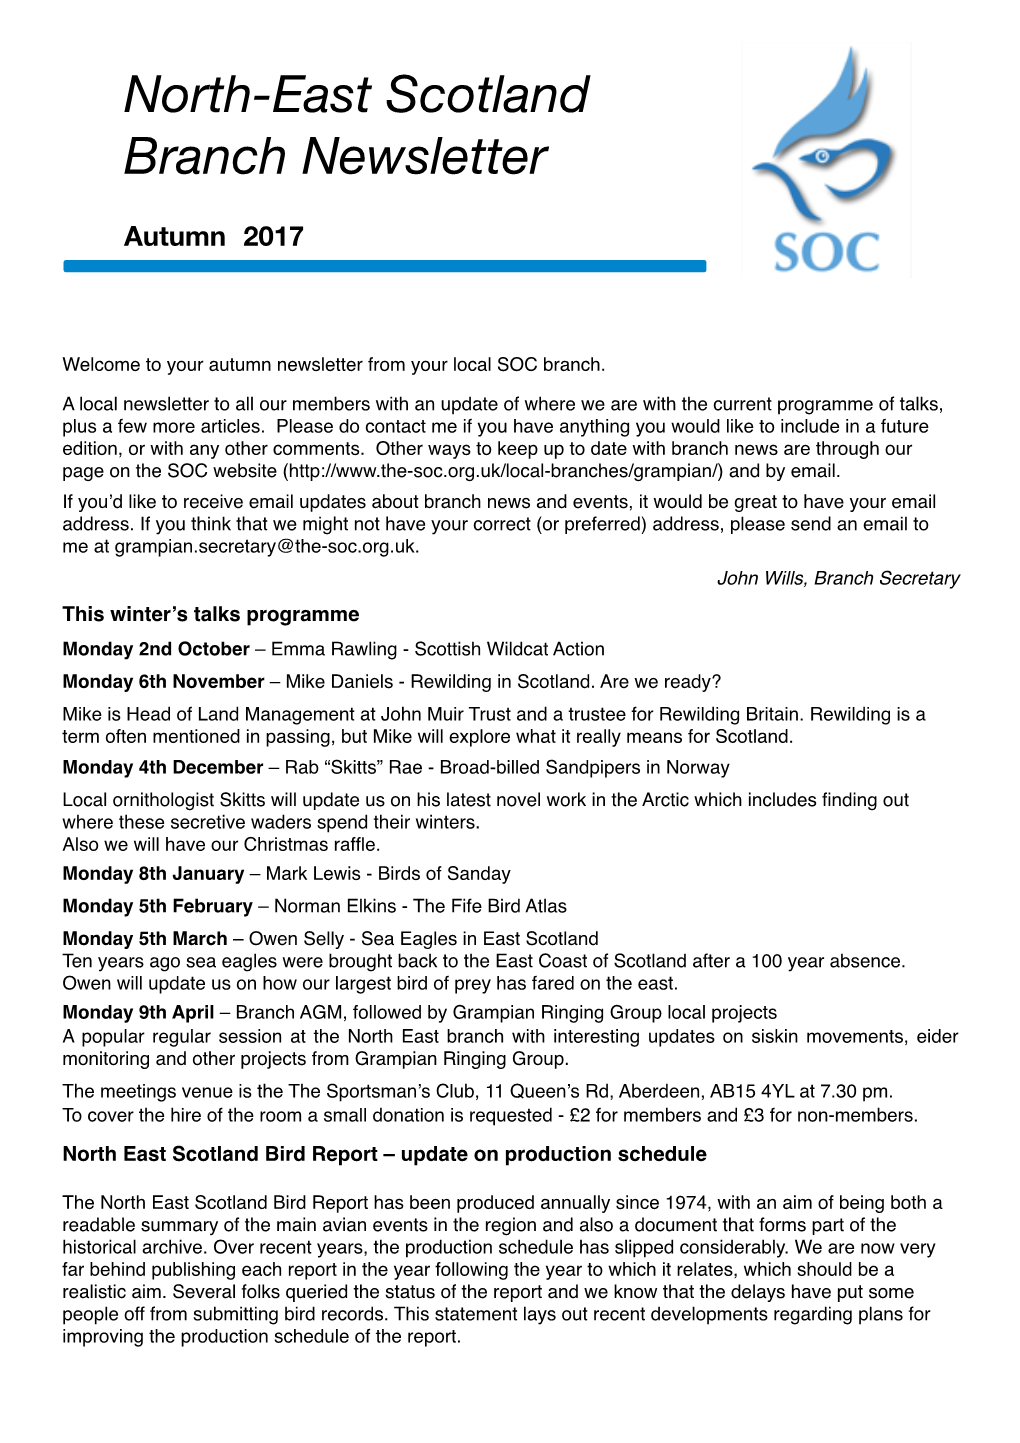 North-East Scotland Branch Newsletter